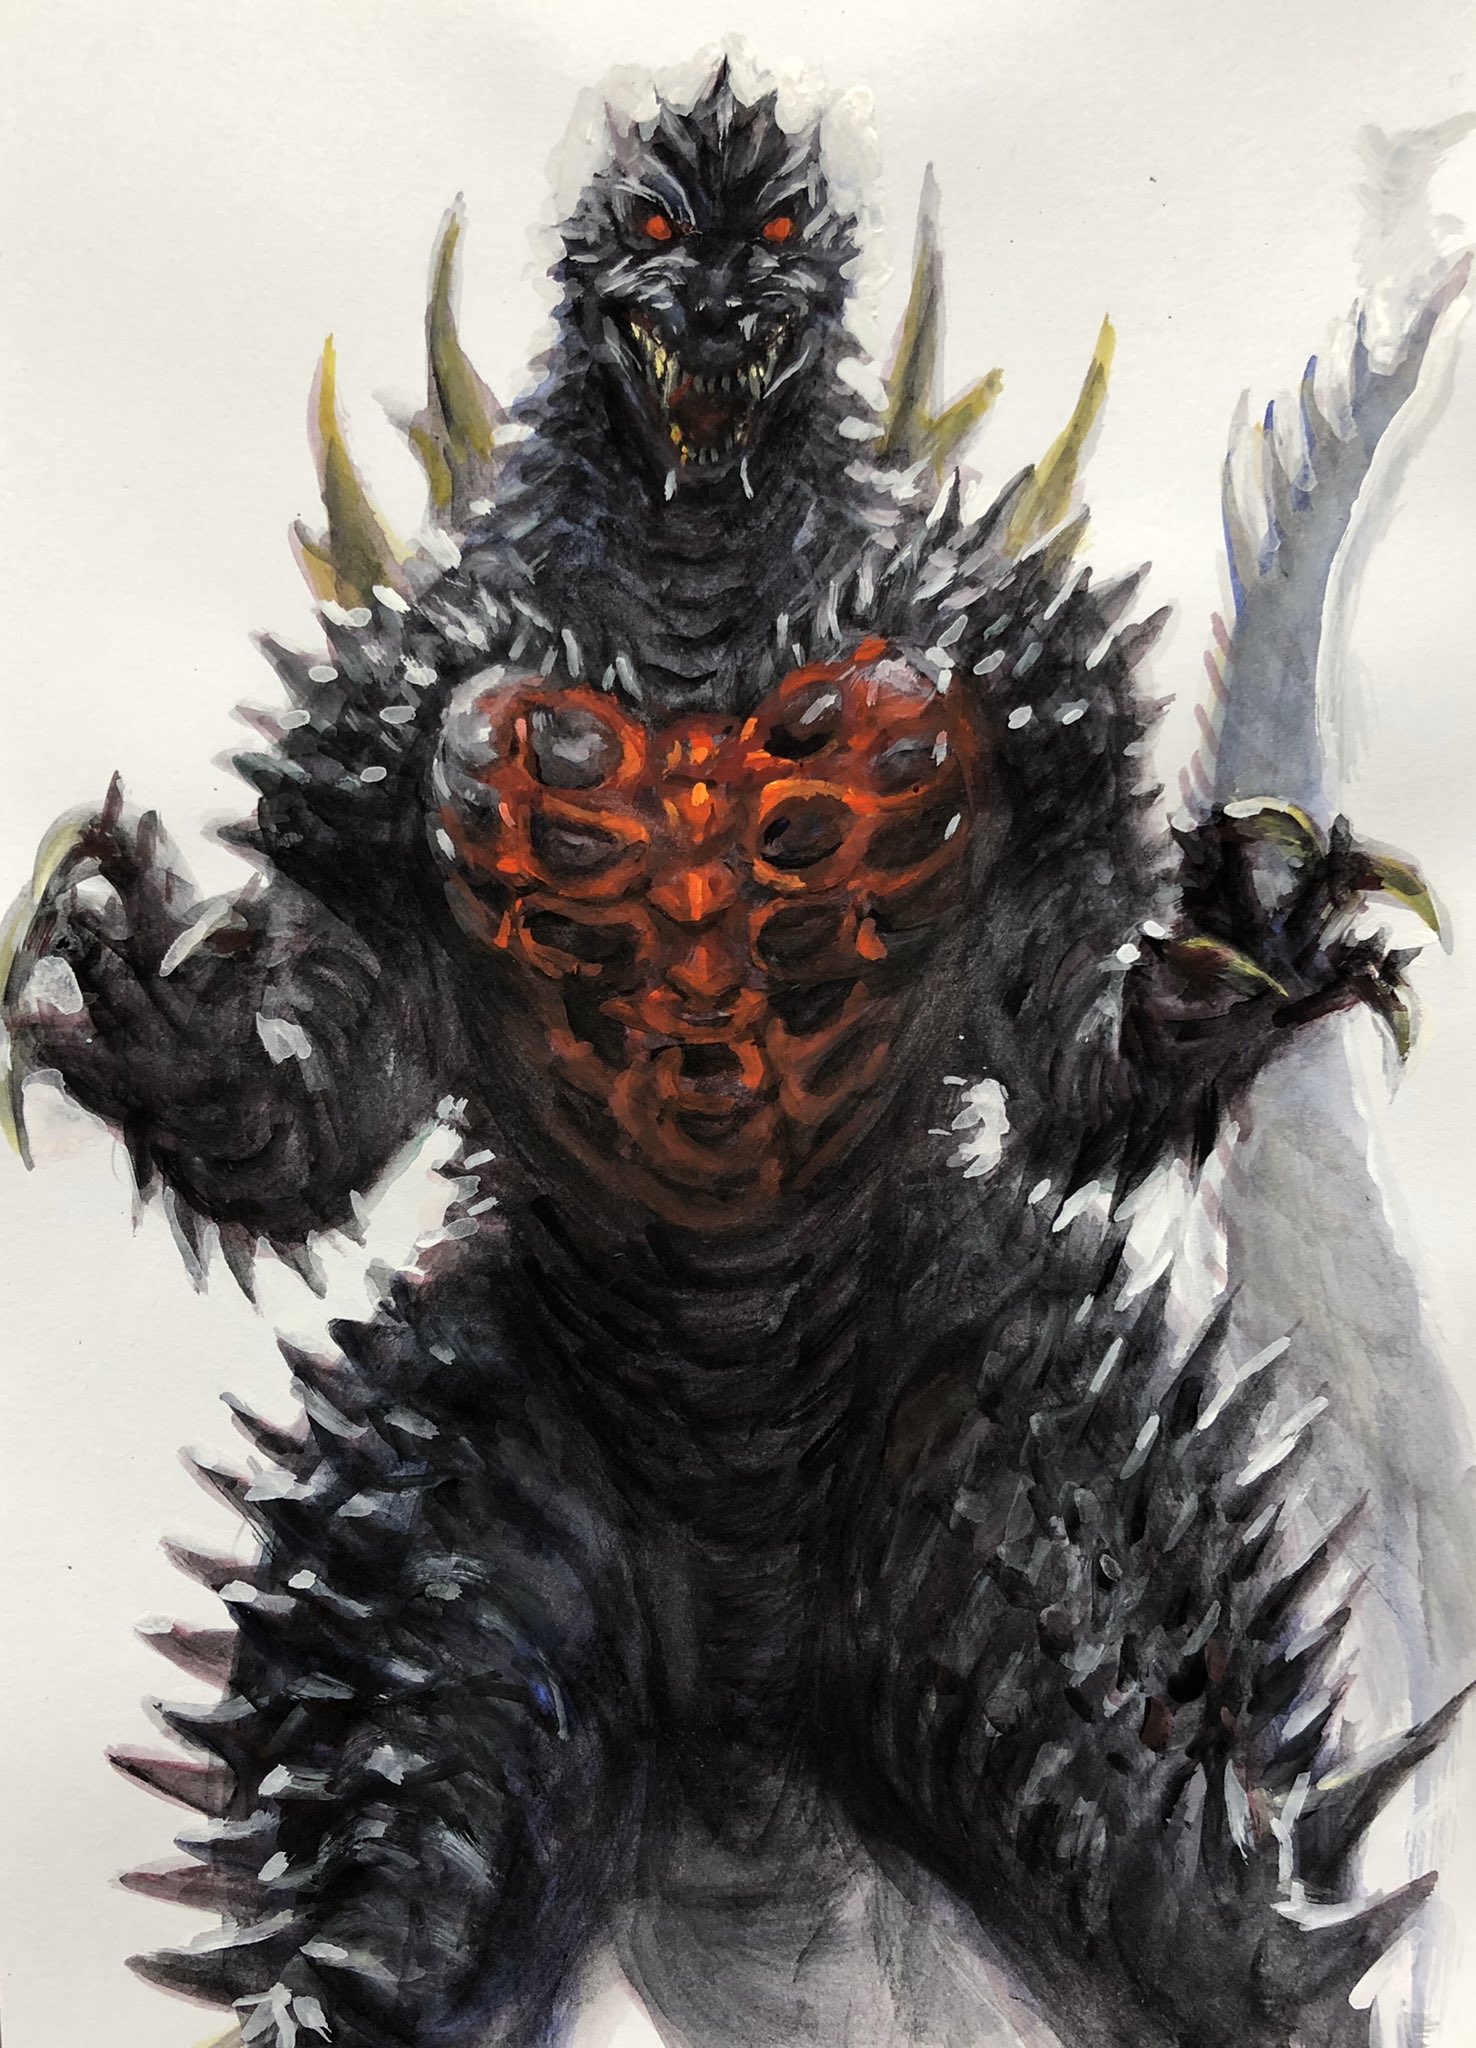 Favorite Unused Godzilla Design? - Toho Kingdom